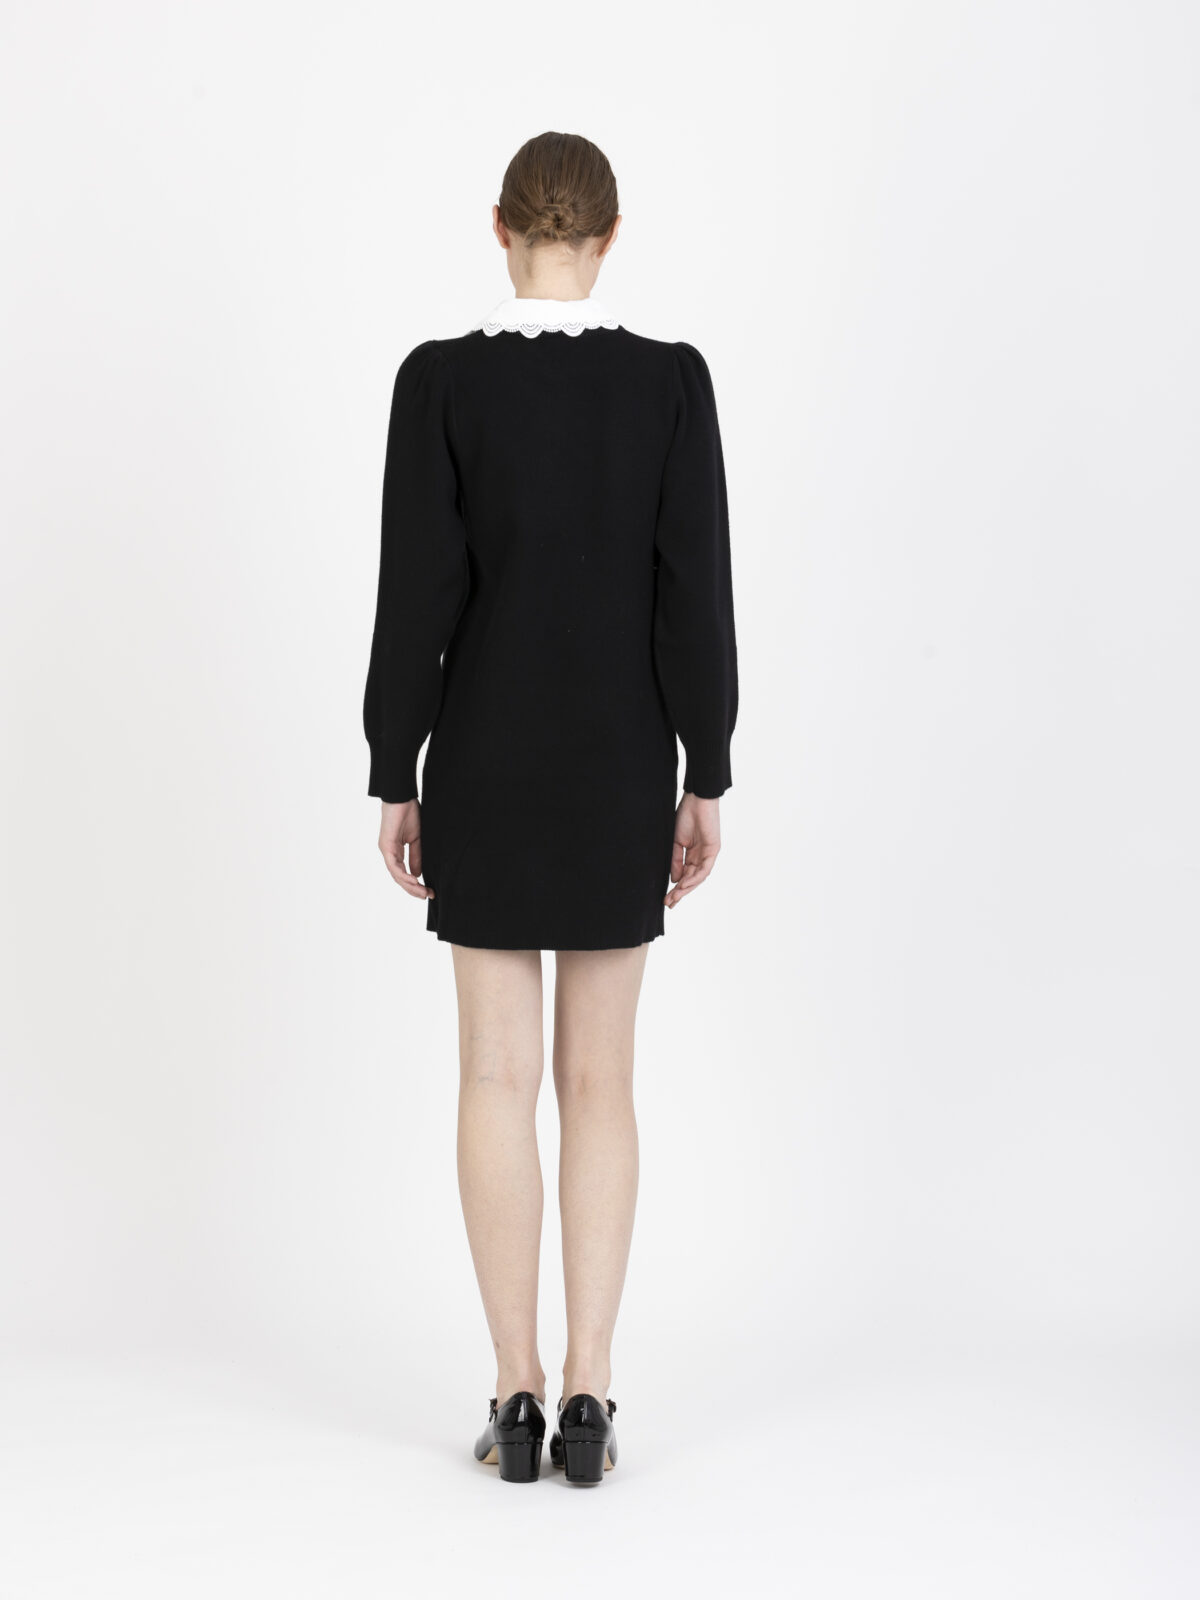 CHANTY-knitted-black-dress-collar-puffy-sleeves-short-suncoo-paris-matchboxathens